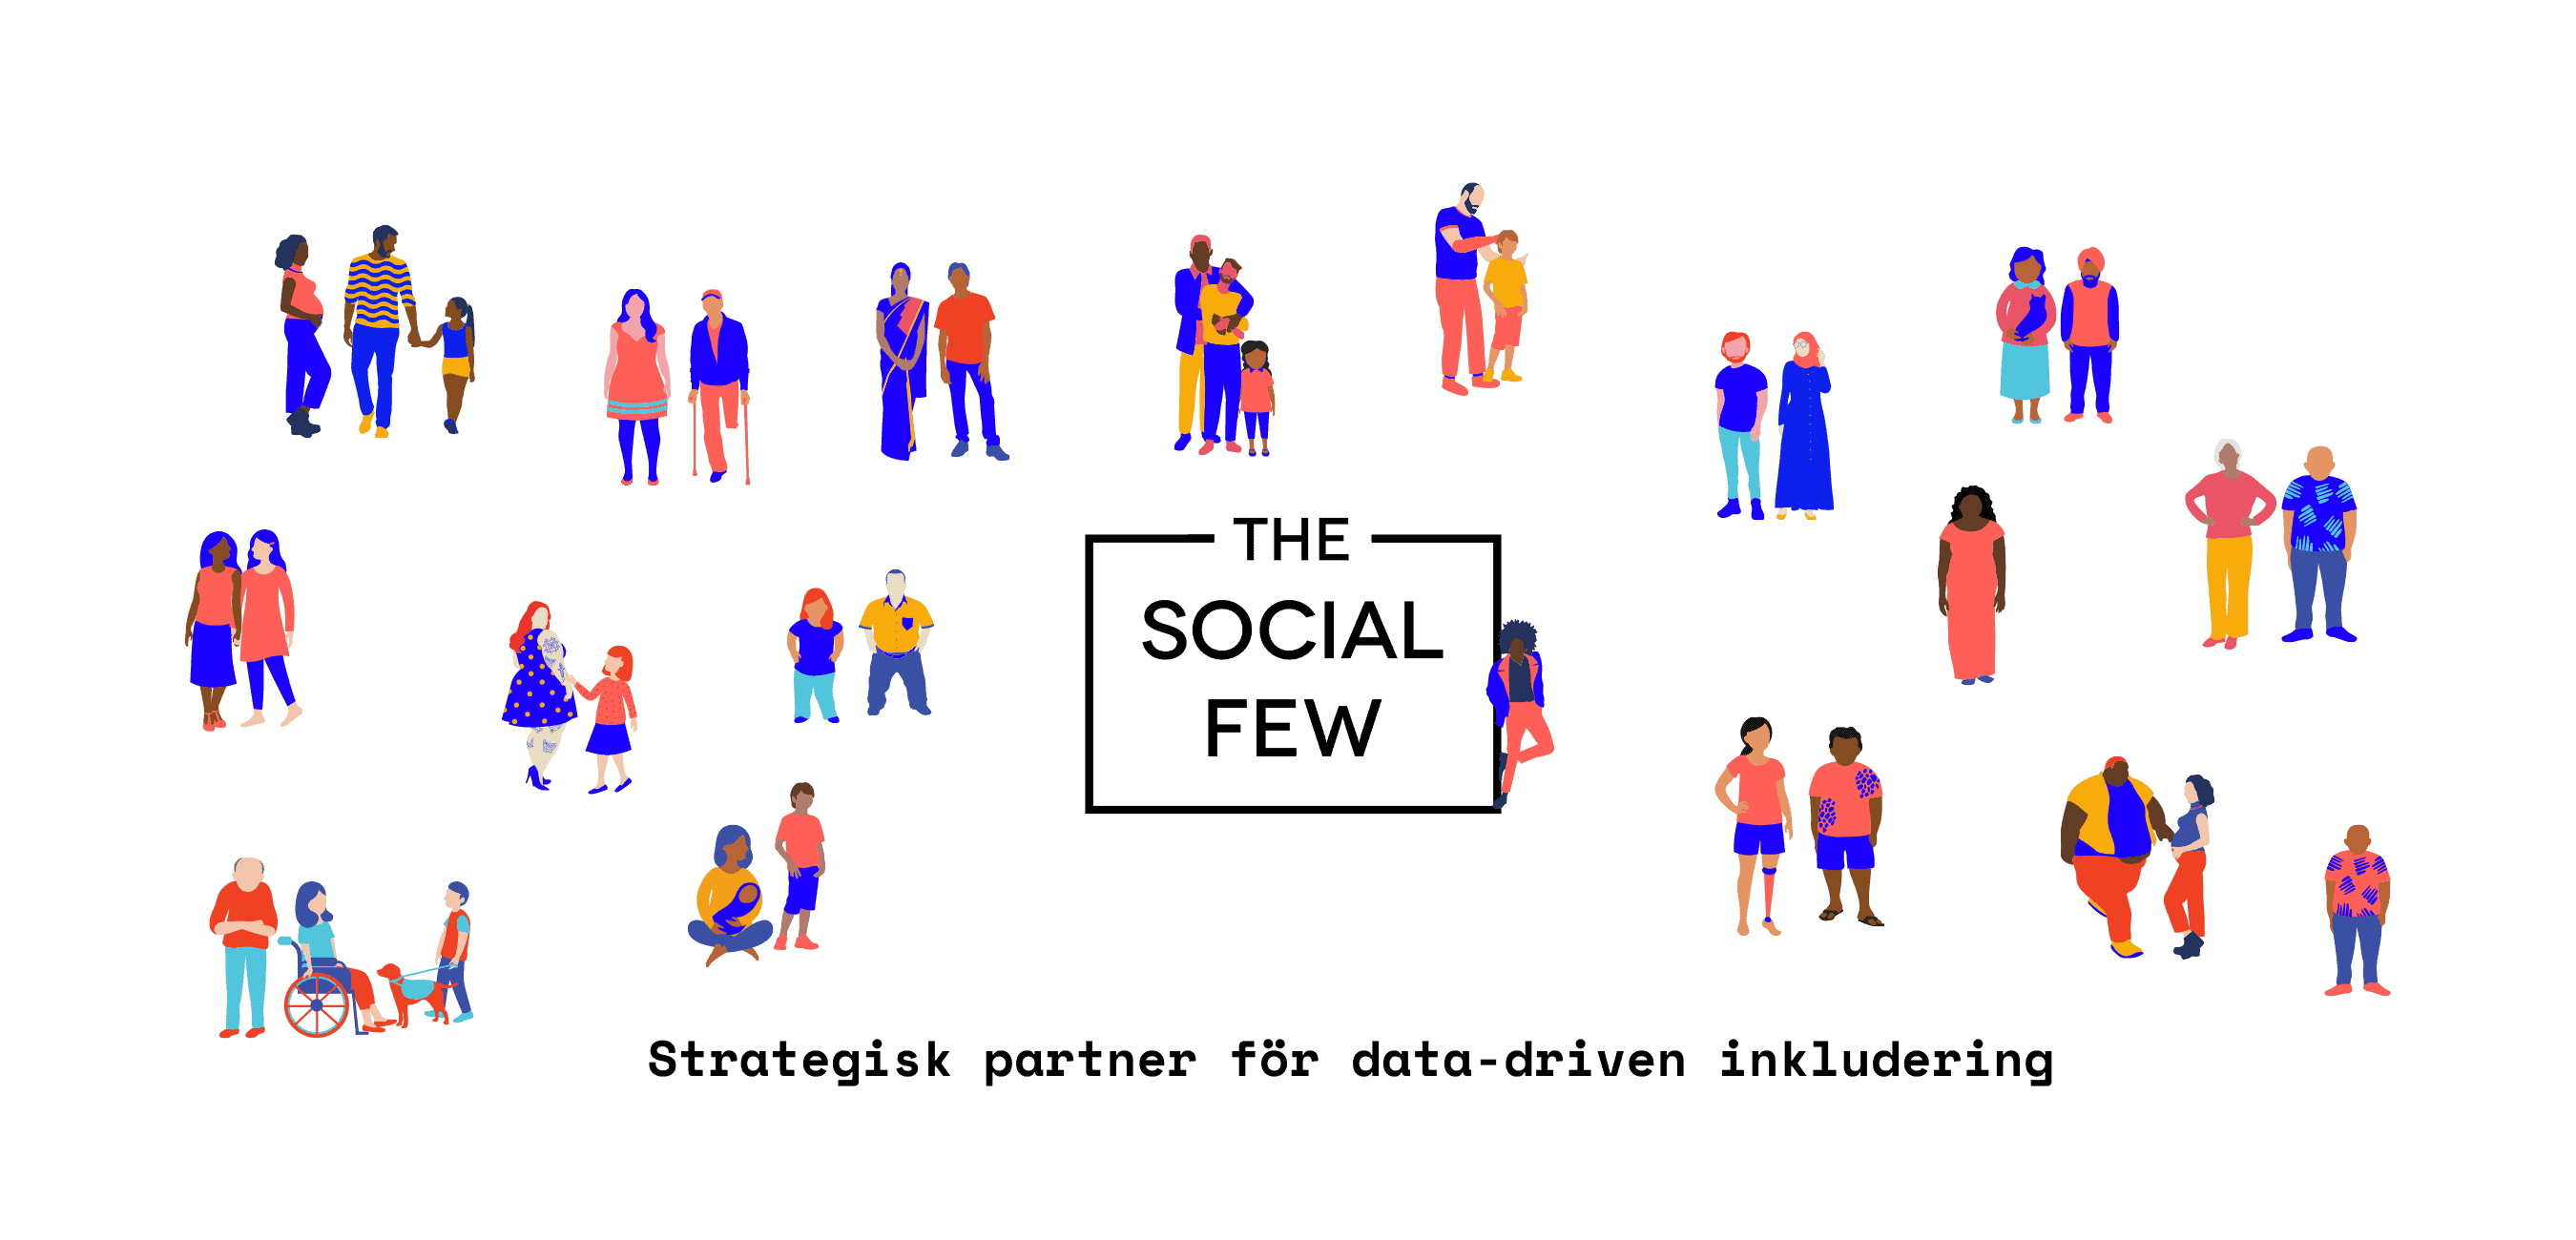 The Social Few